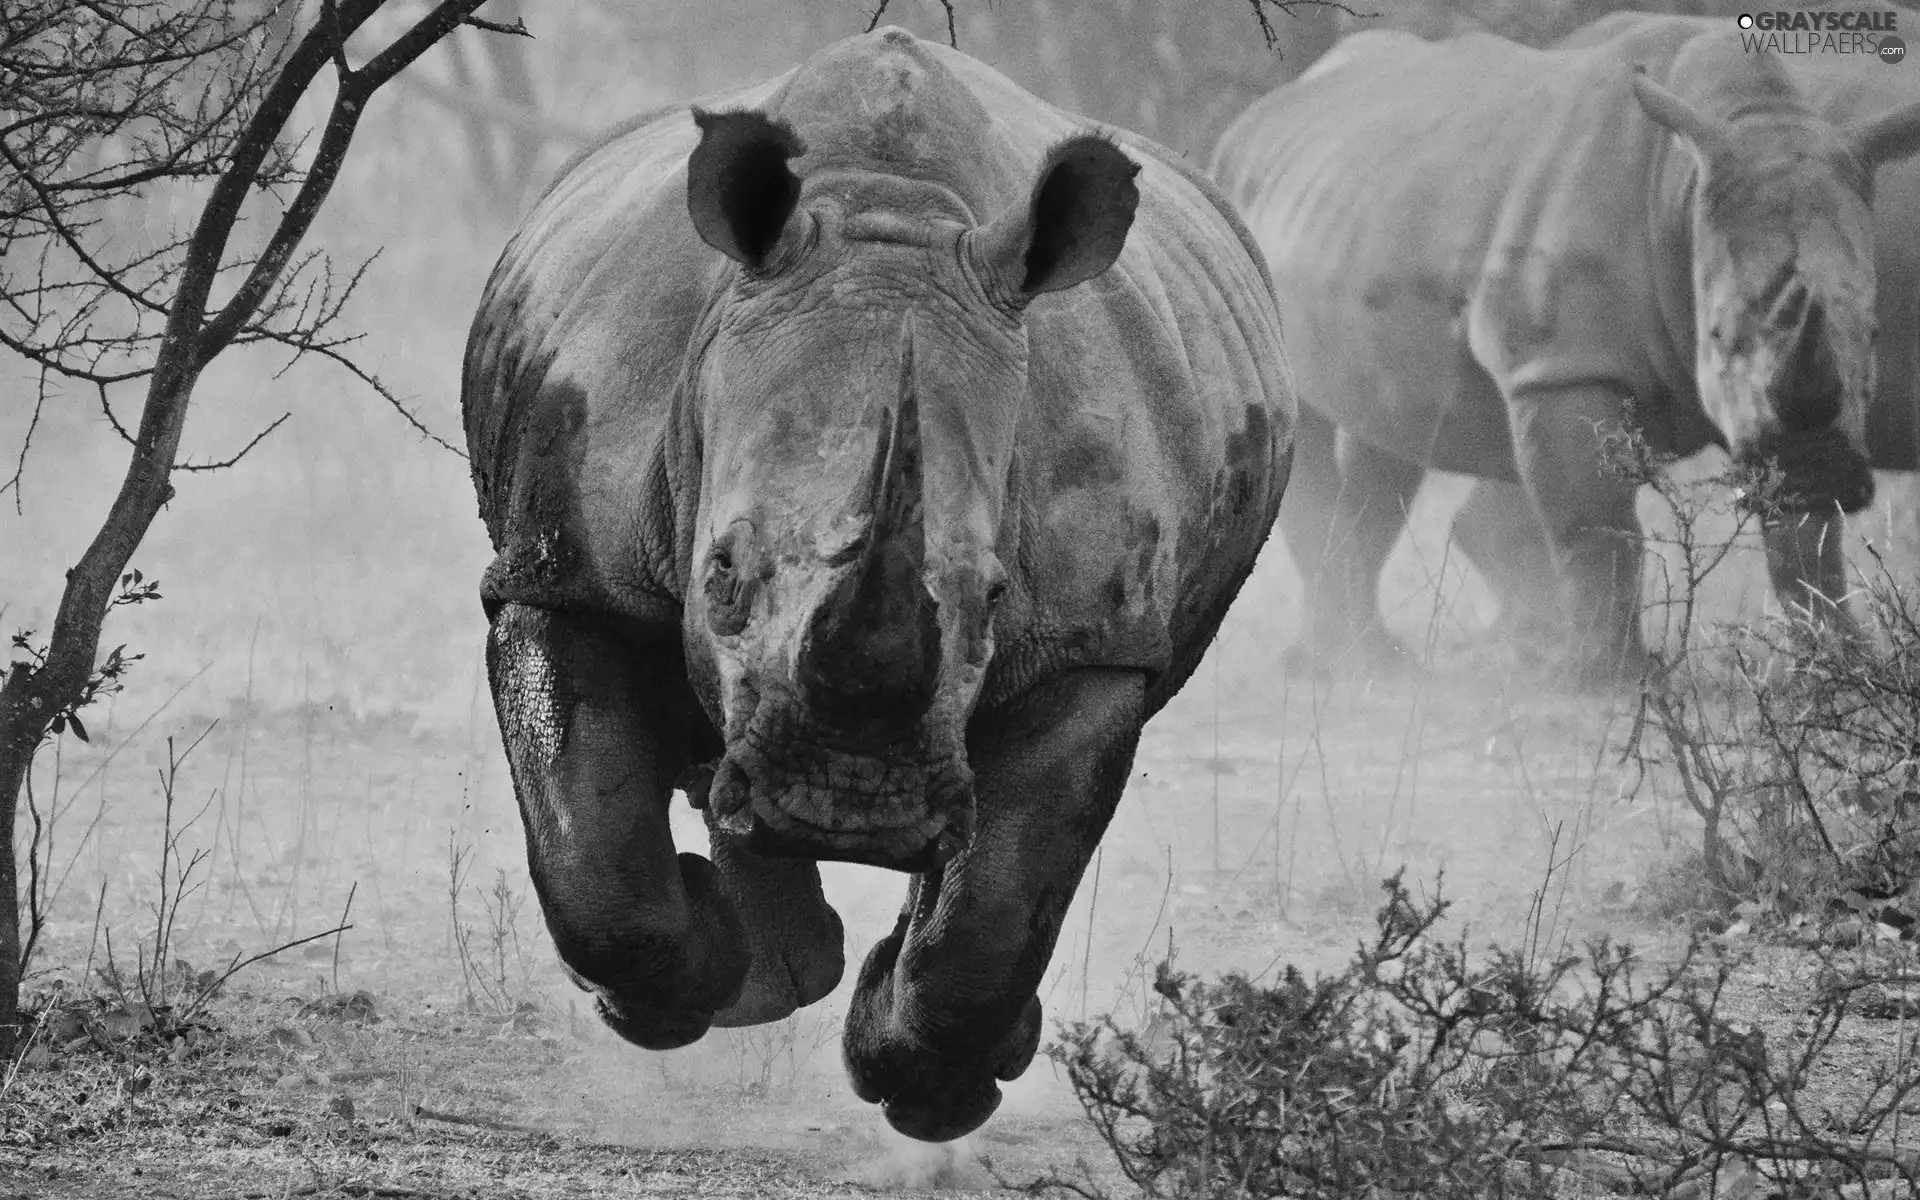 savanna, Rhino, gear